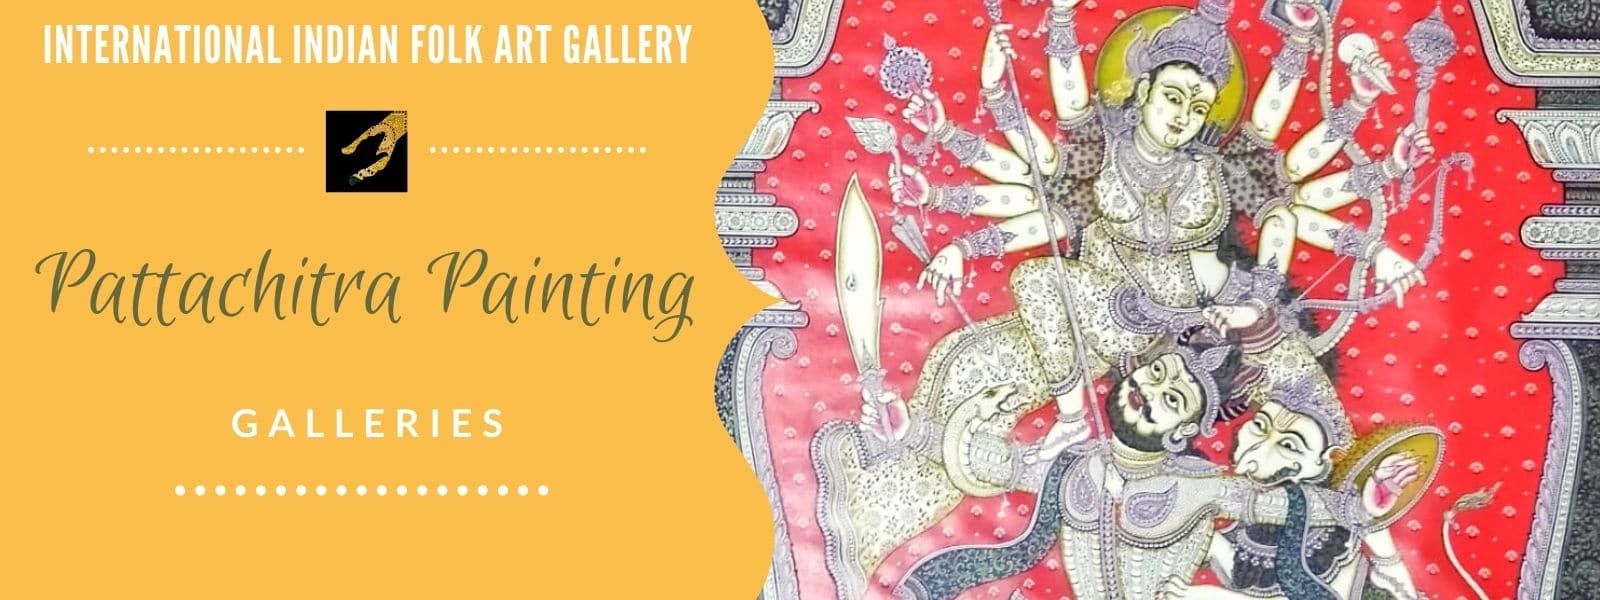 Pattachitra Painting Images International Indian Folk Art Gallery